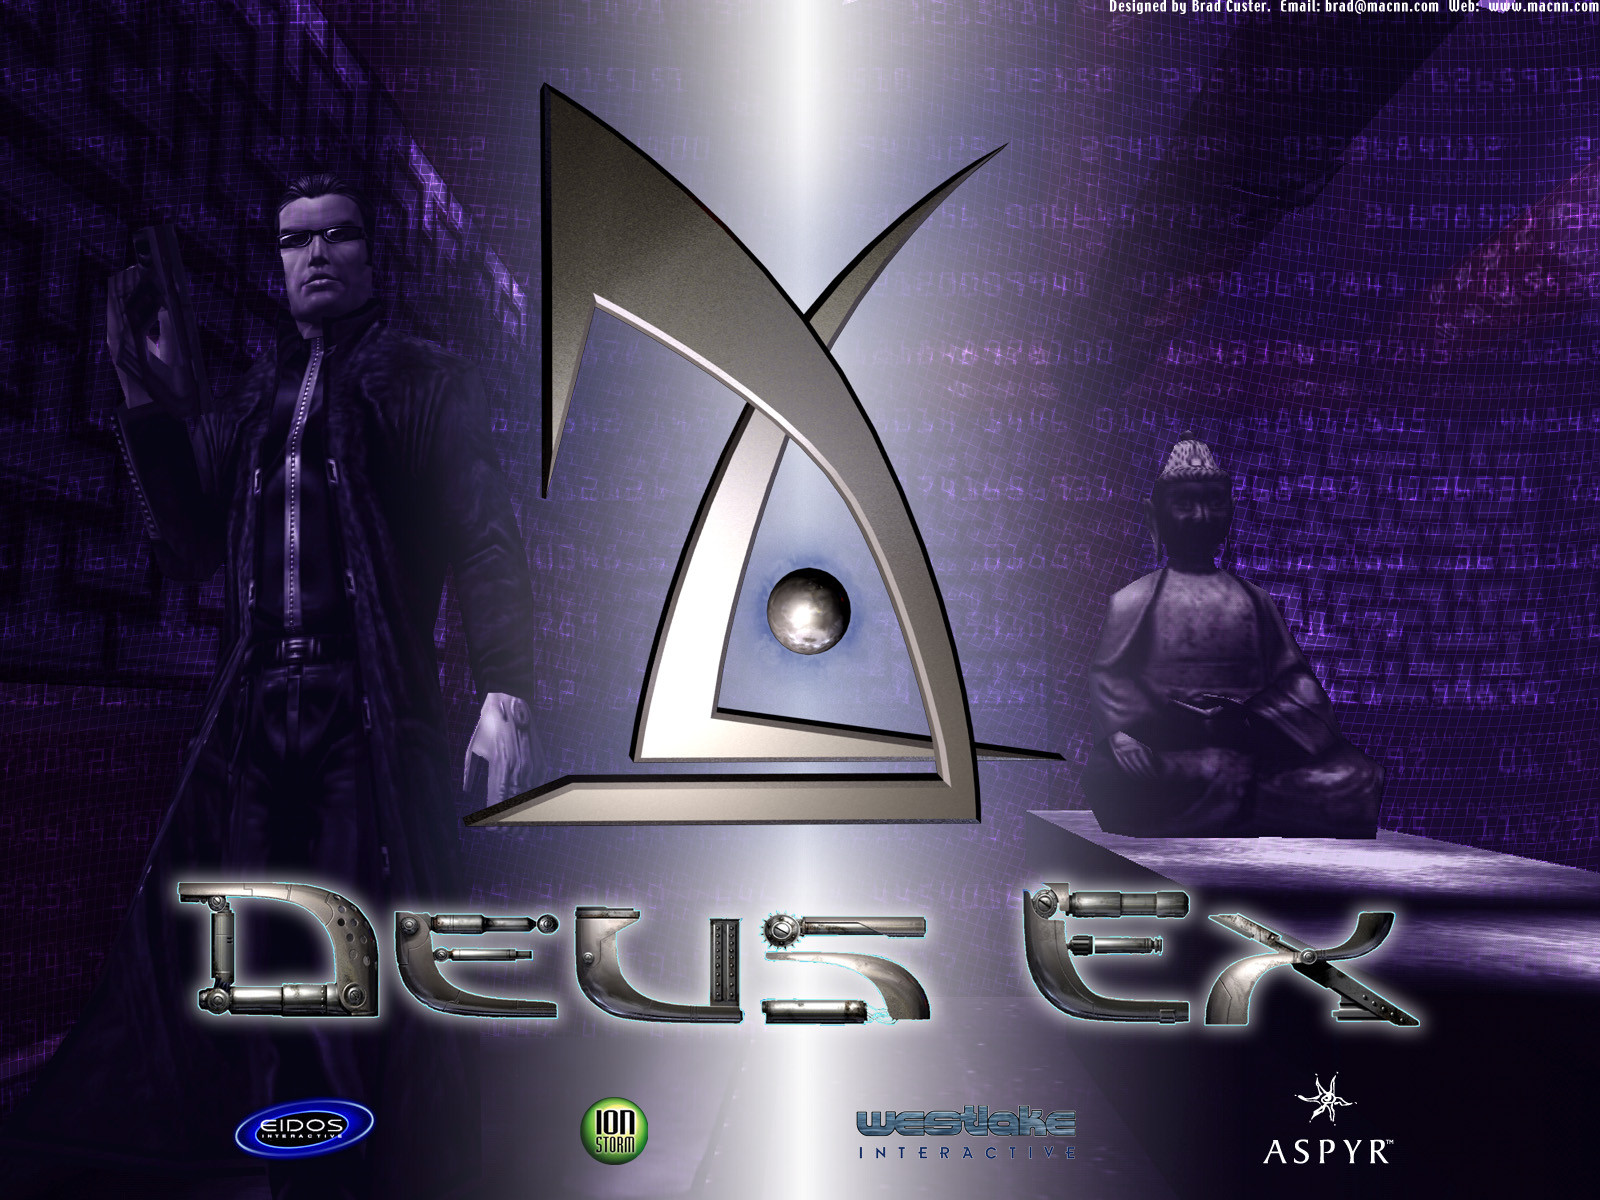 Deus Ex wallpaper from way back in the early 2000's: Deusex